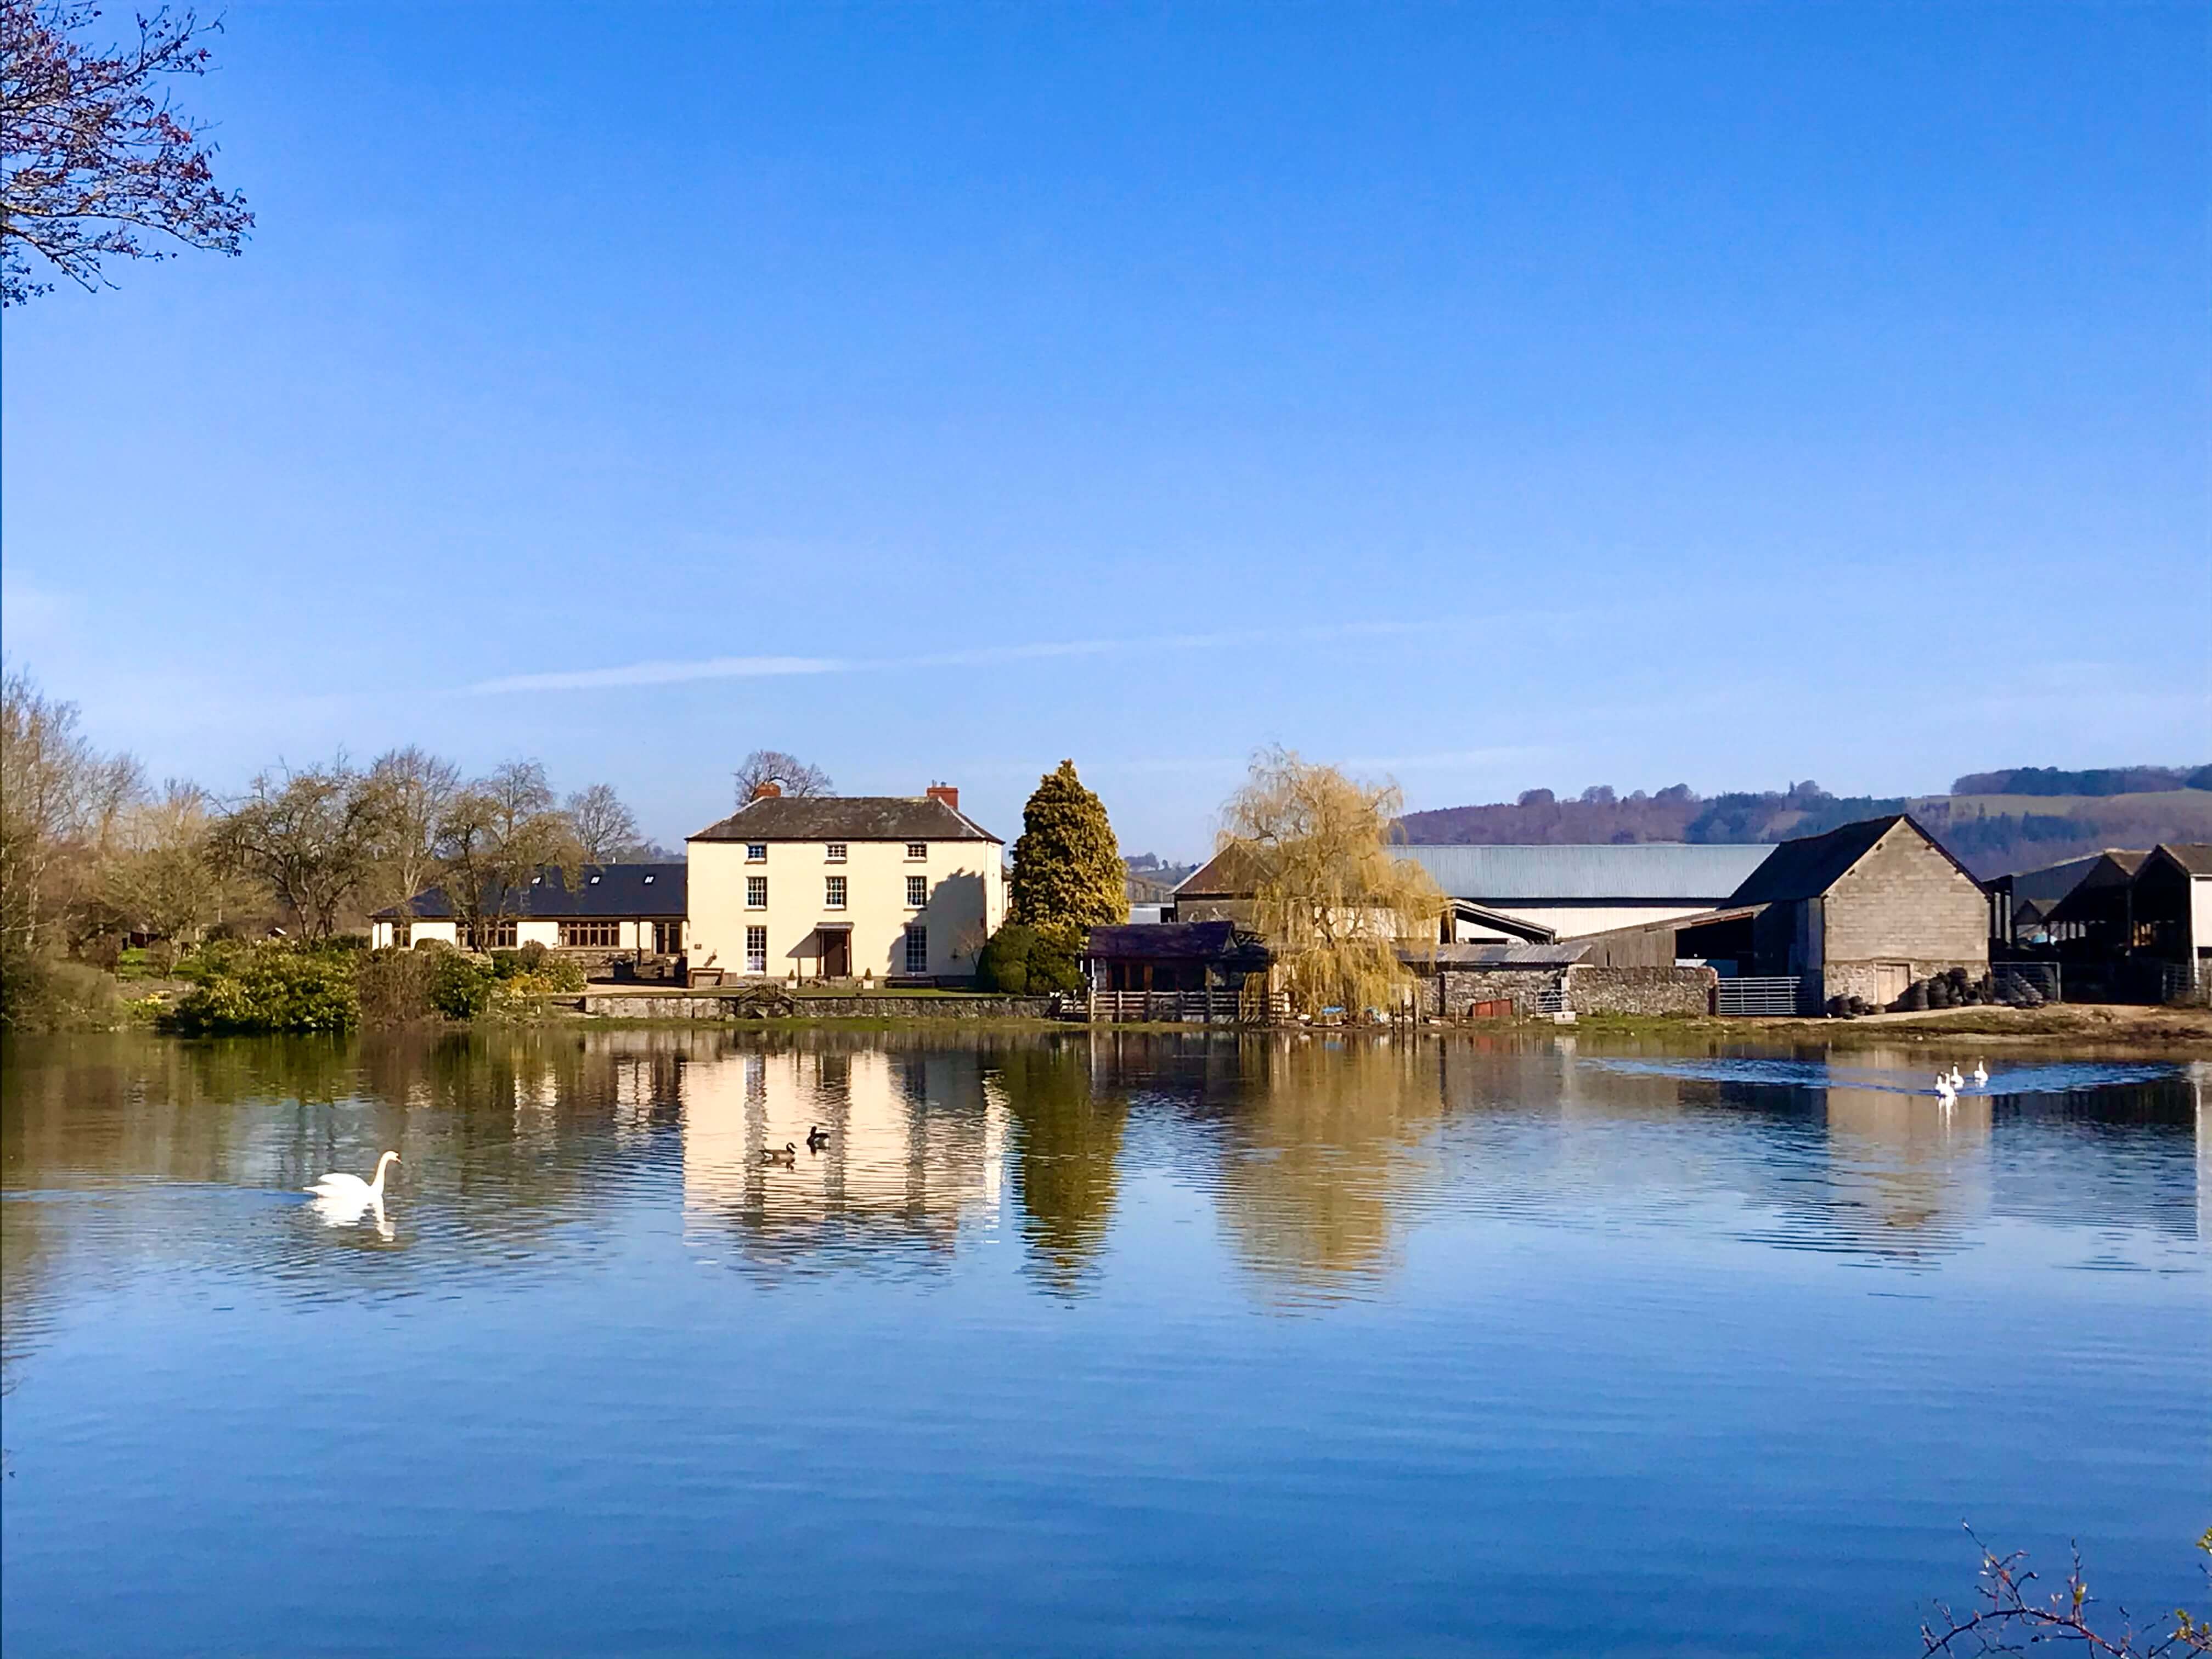 Hindwell Farmhouse - idyllic lakeside setting with swans